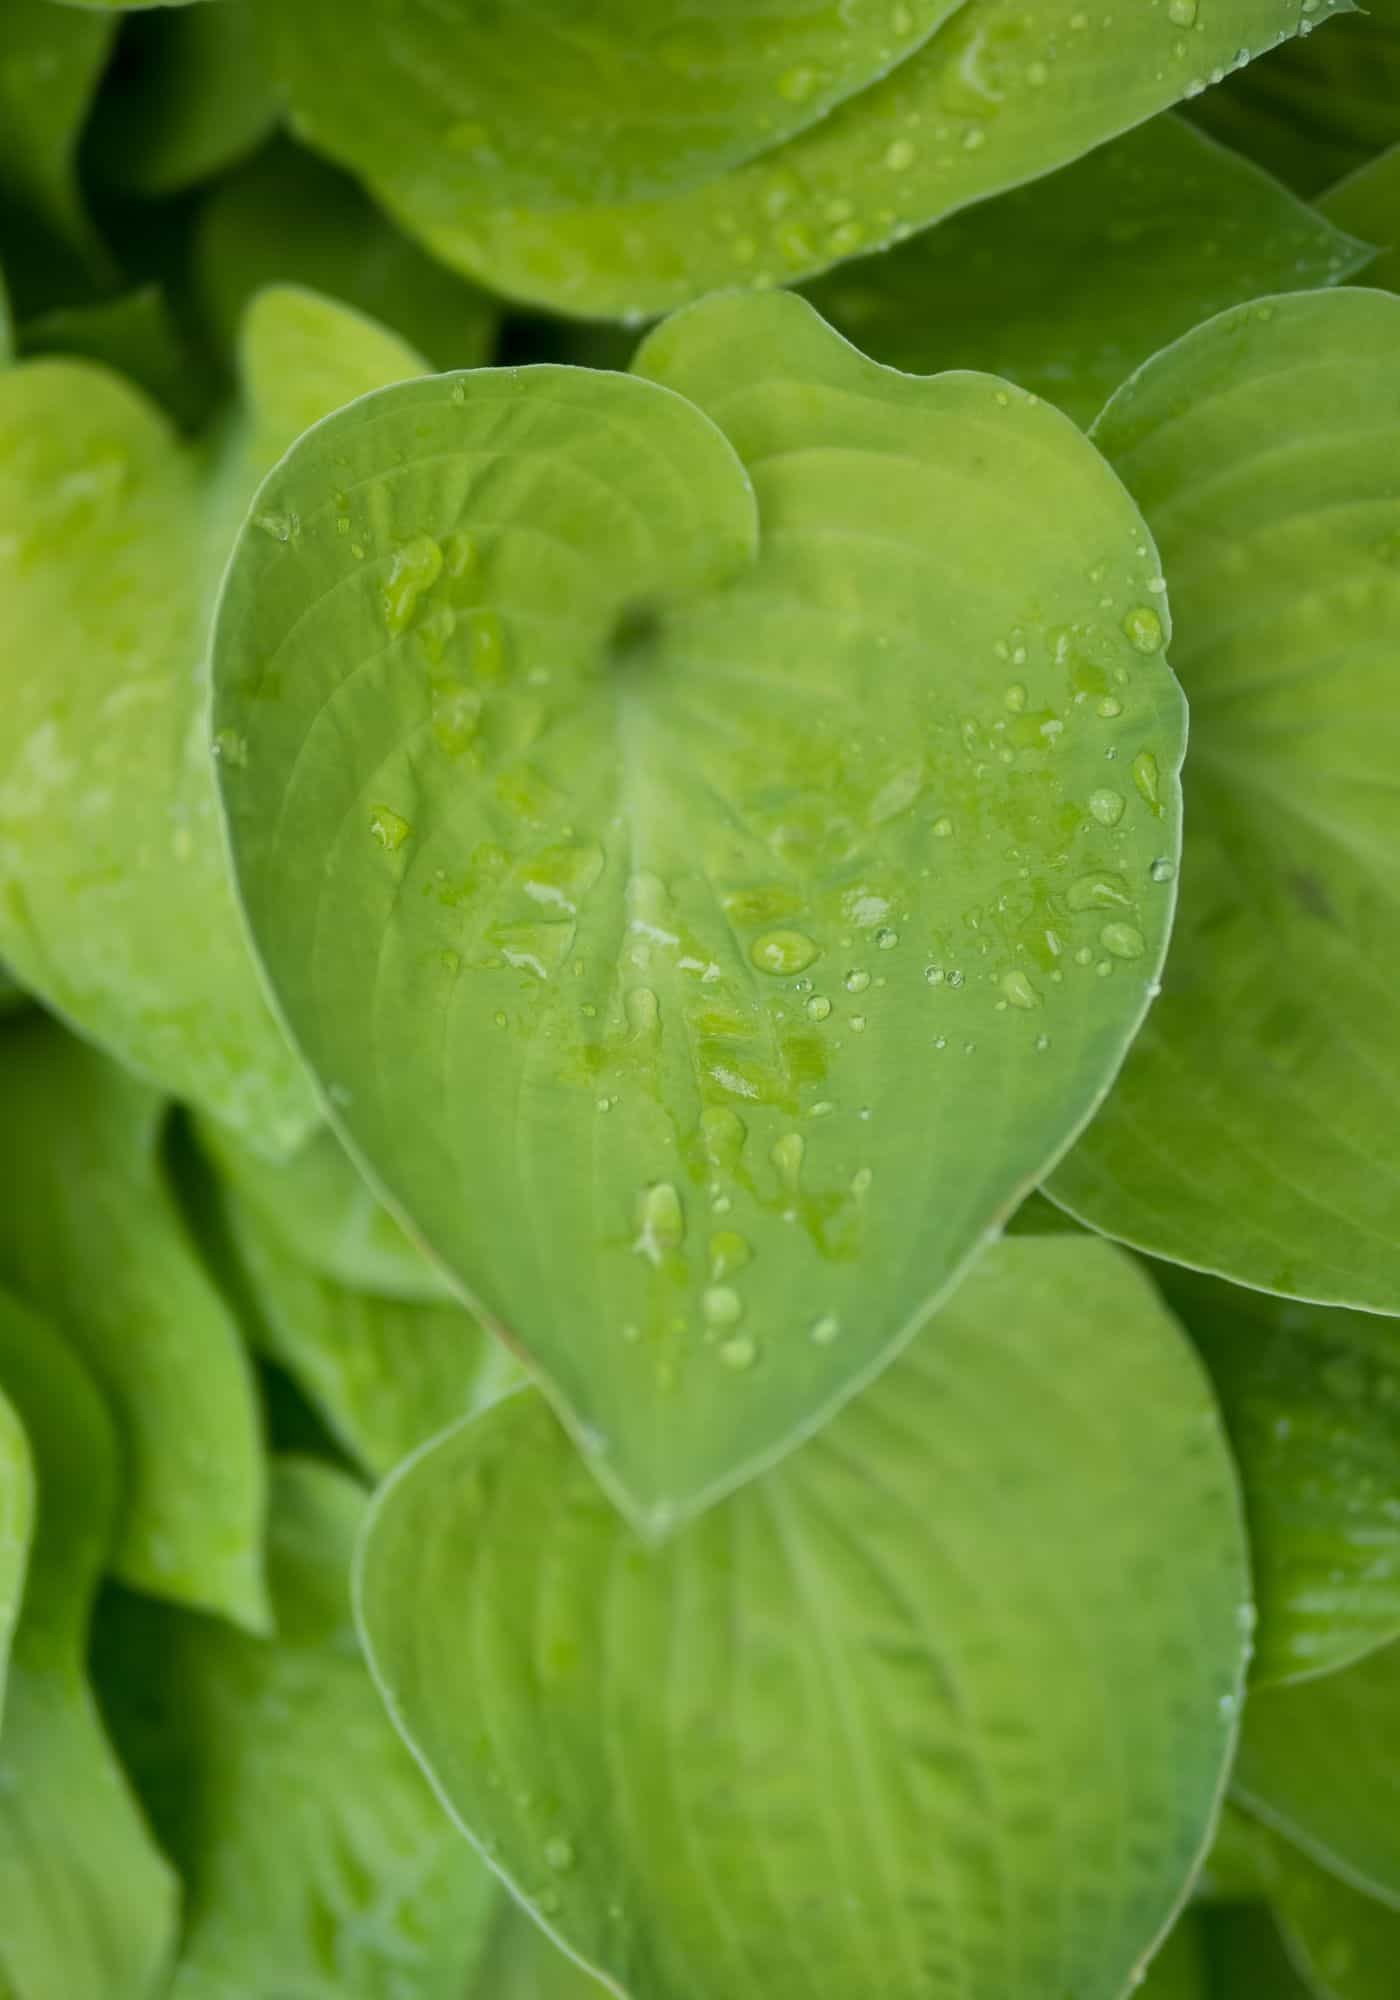 Green hosta leaf covered in water